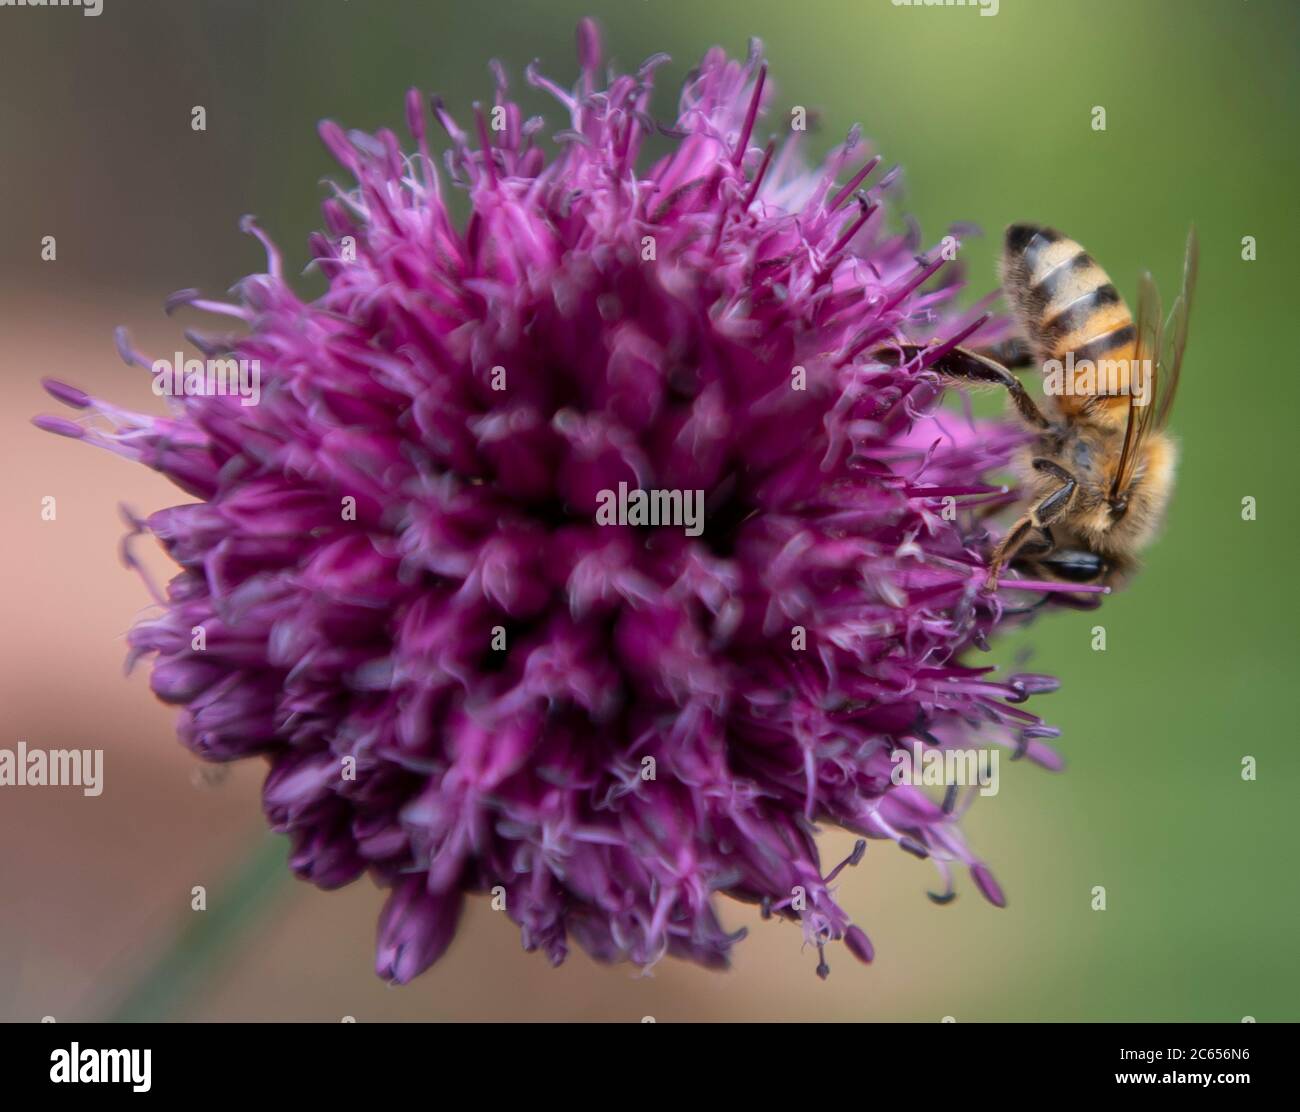 Wimbledon, London, UK. 7 July 2020. Honey bee attracted to vivid purple Allium sphaerocephalon flowers in a London garden. Credit: Malcolm Park/Alamy Live News. Stock Photo